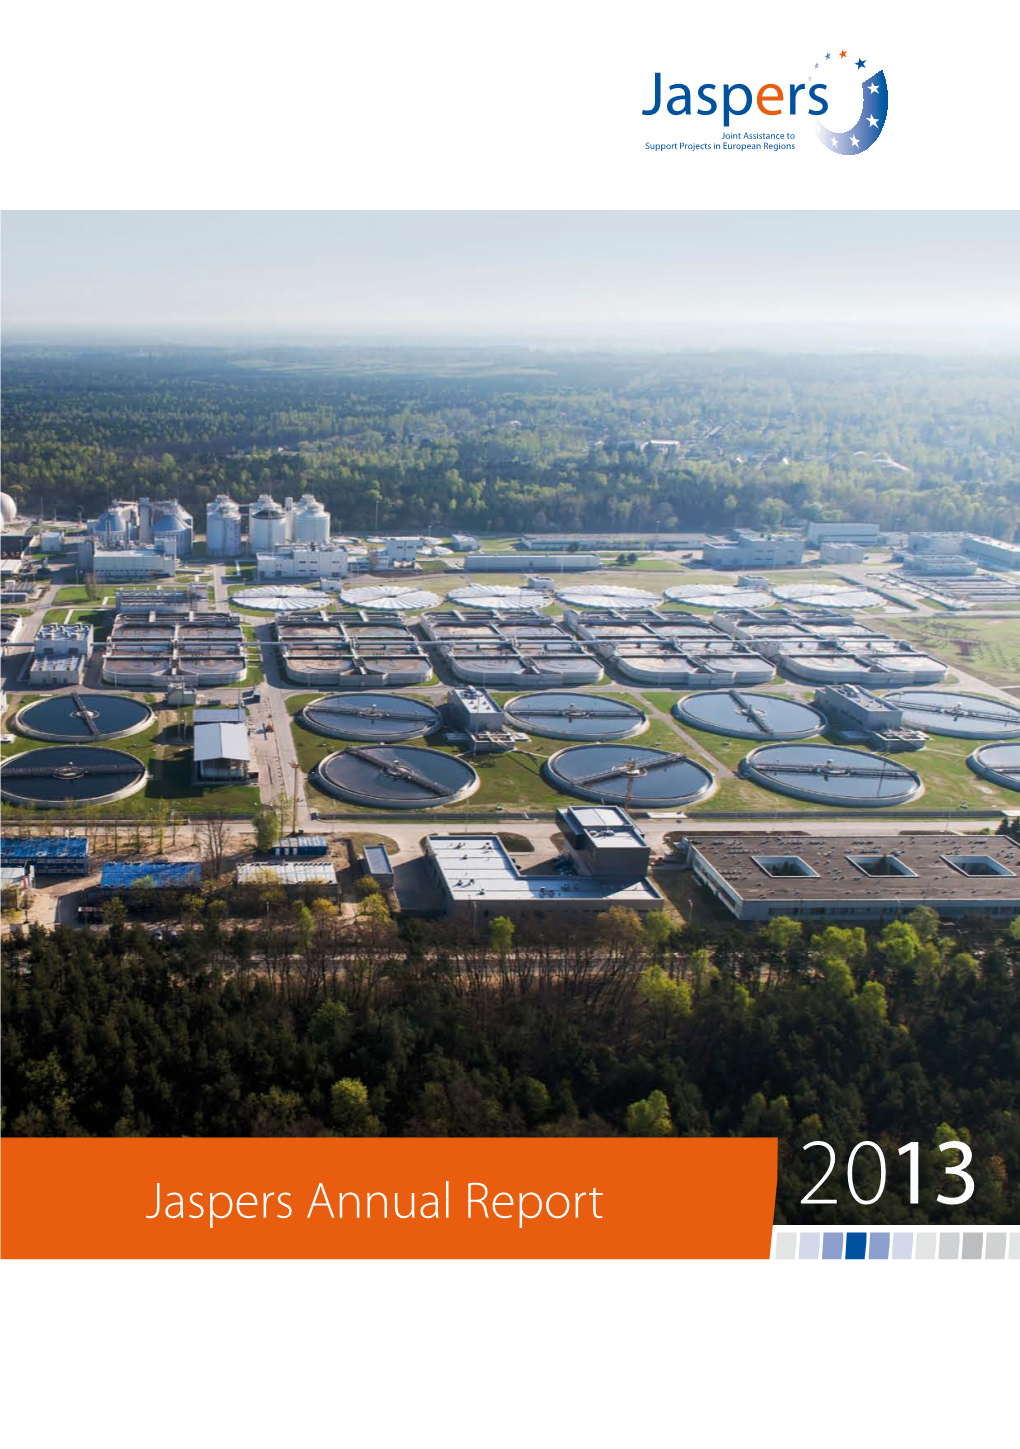 Jaspers Annual Report 2013